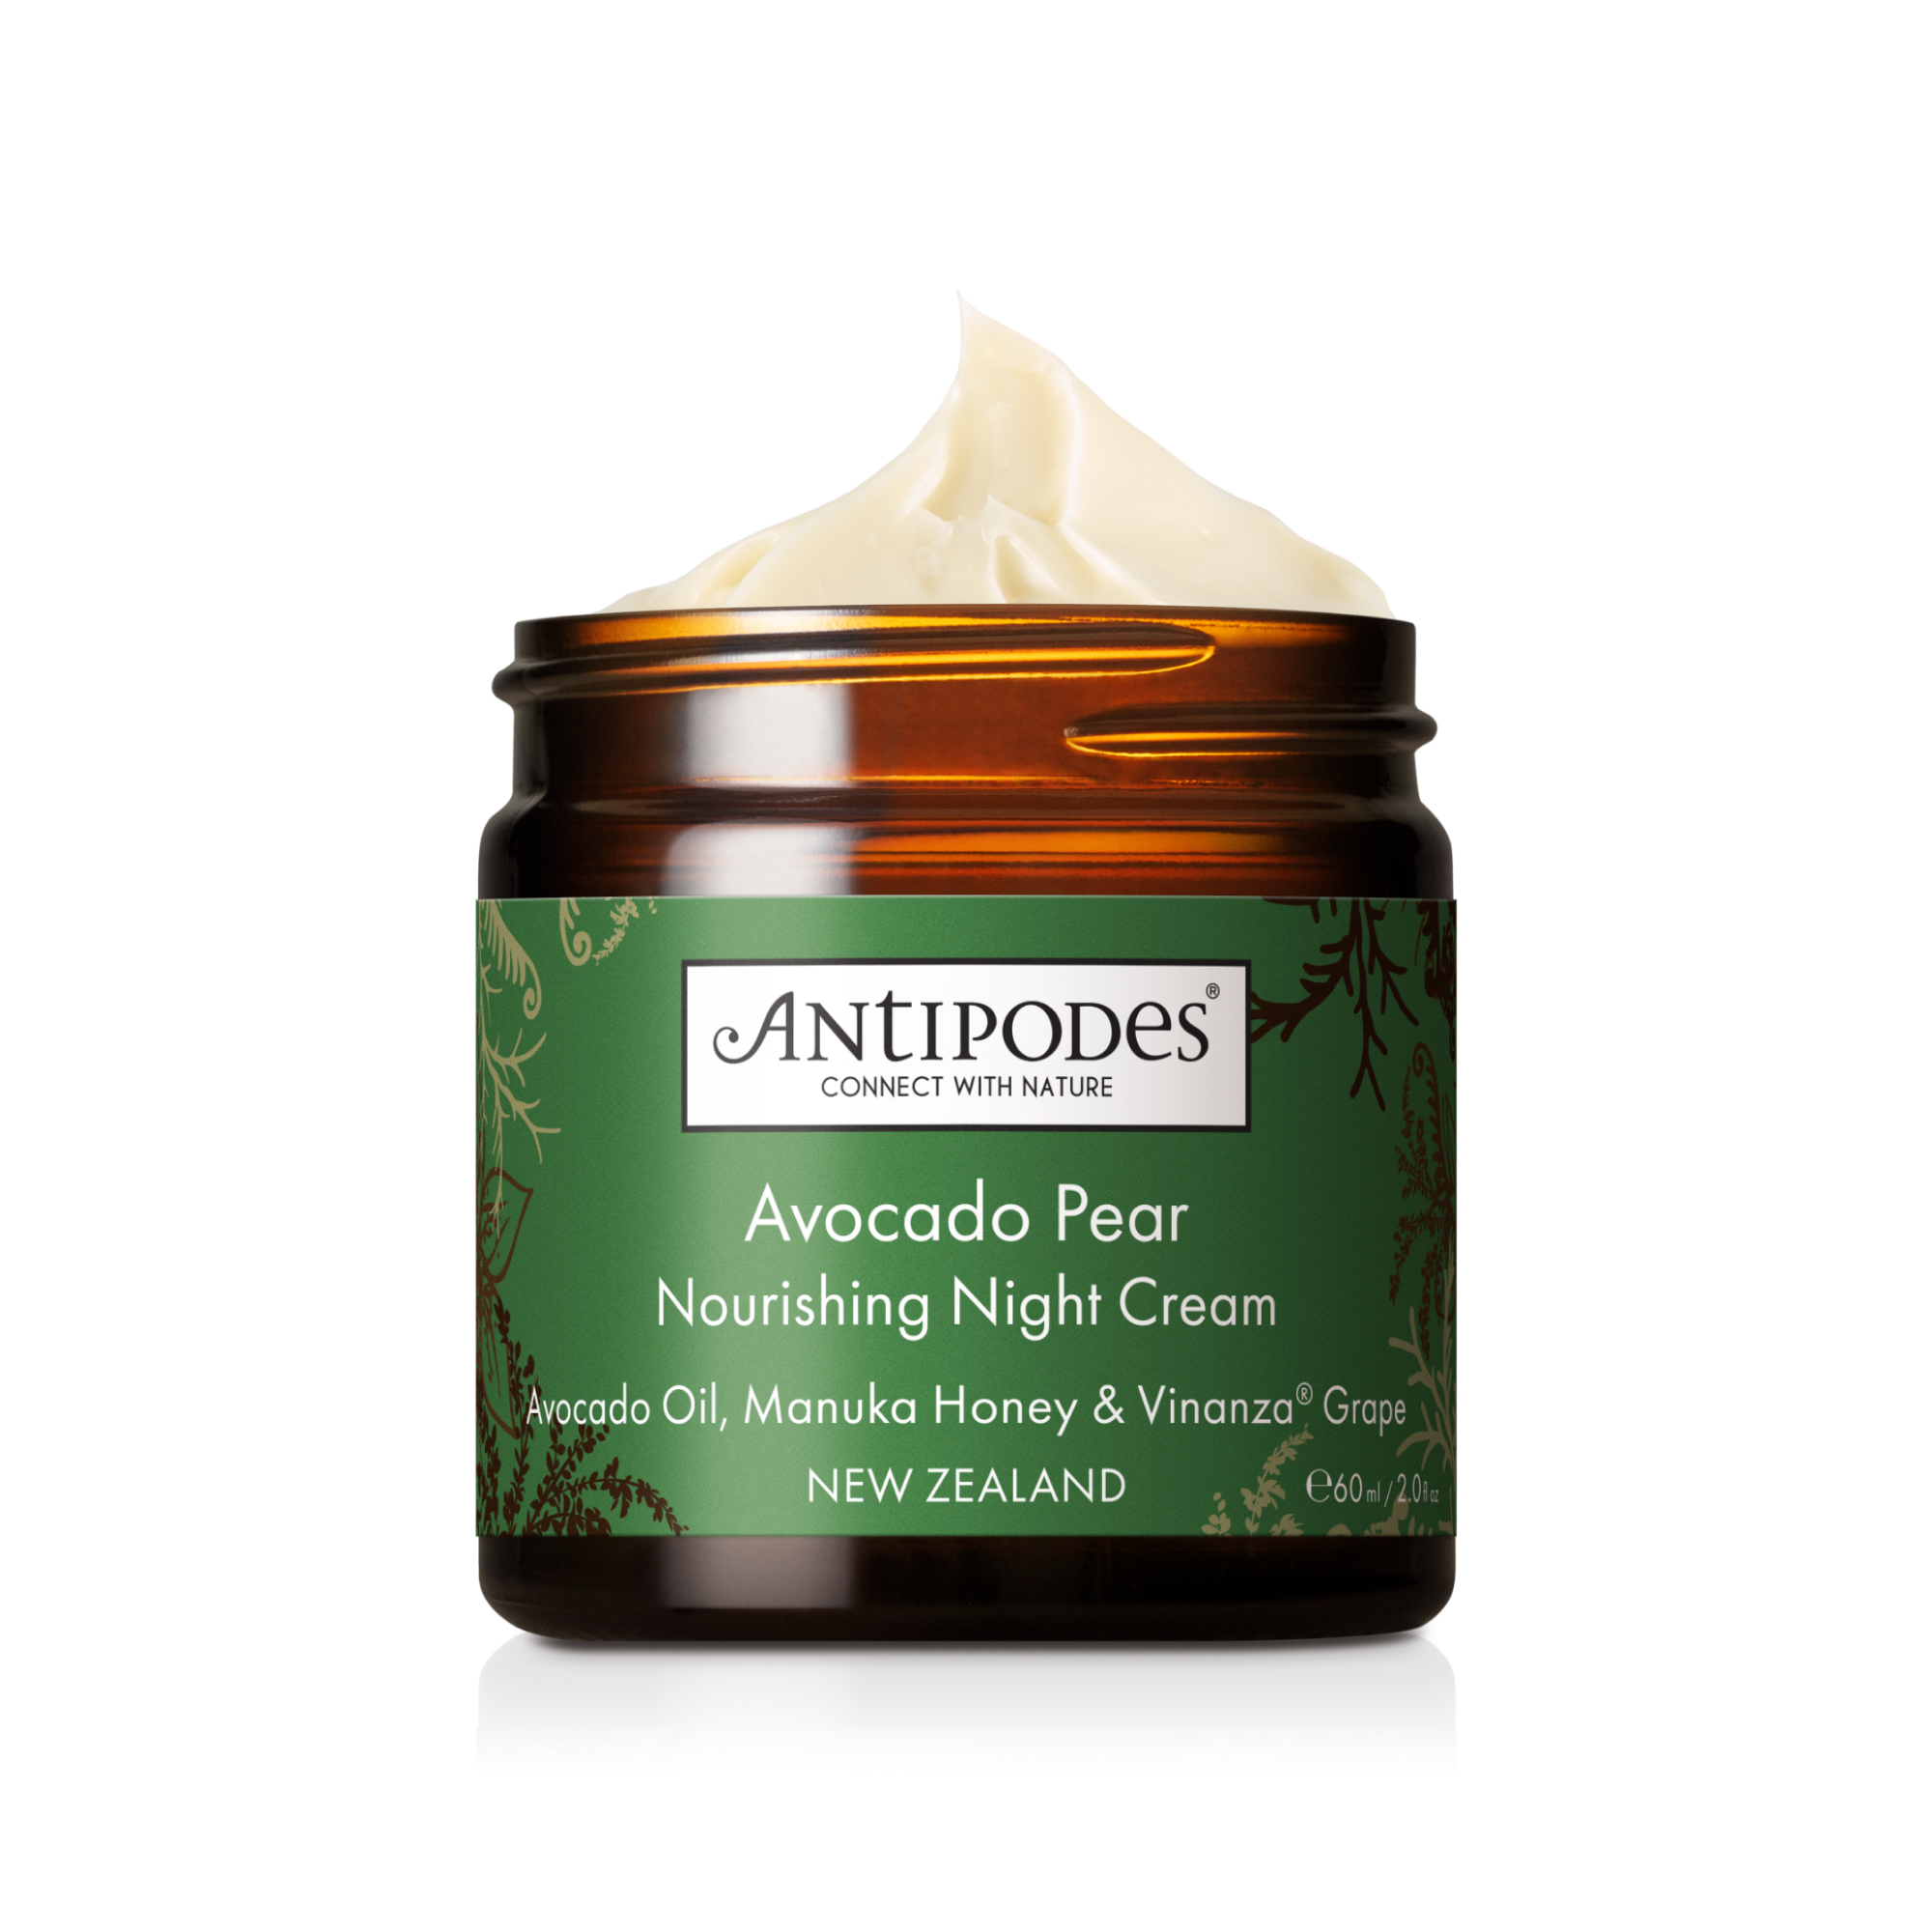 Antipodes Avocado Pear Nourishing Night Cream Reviews - beautyheaven